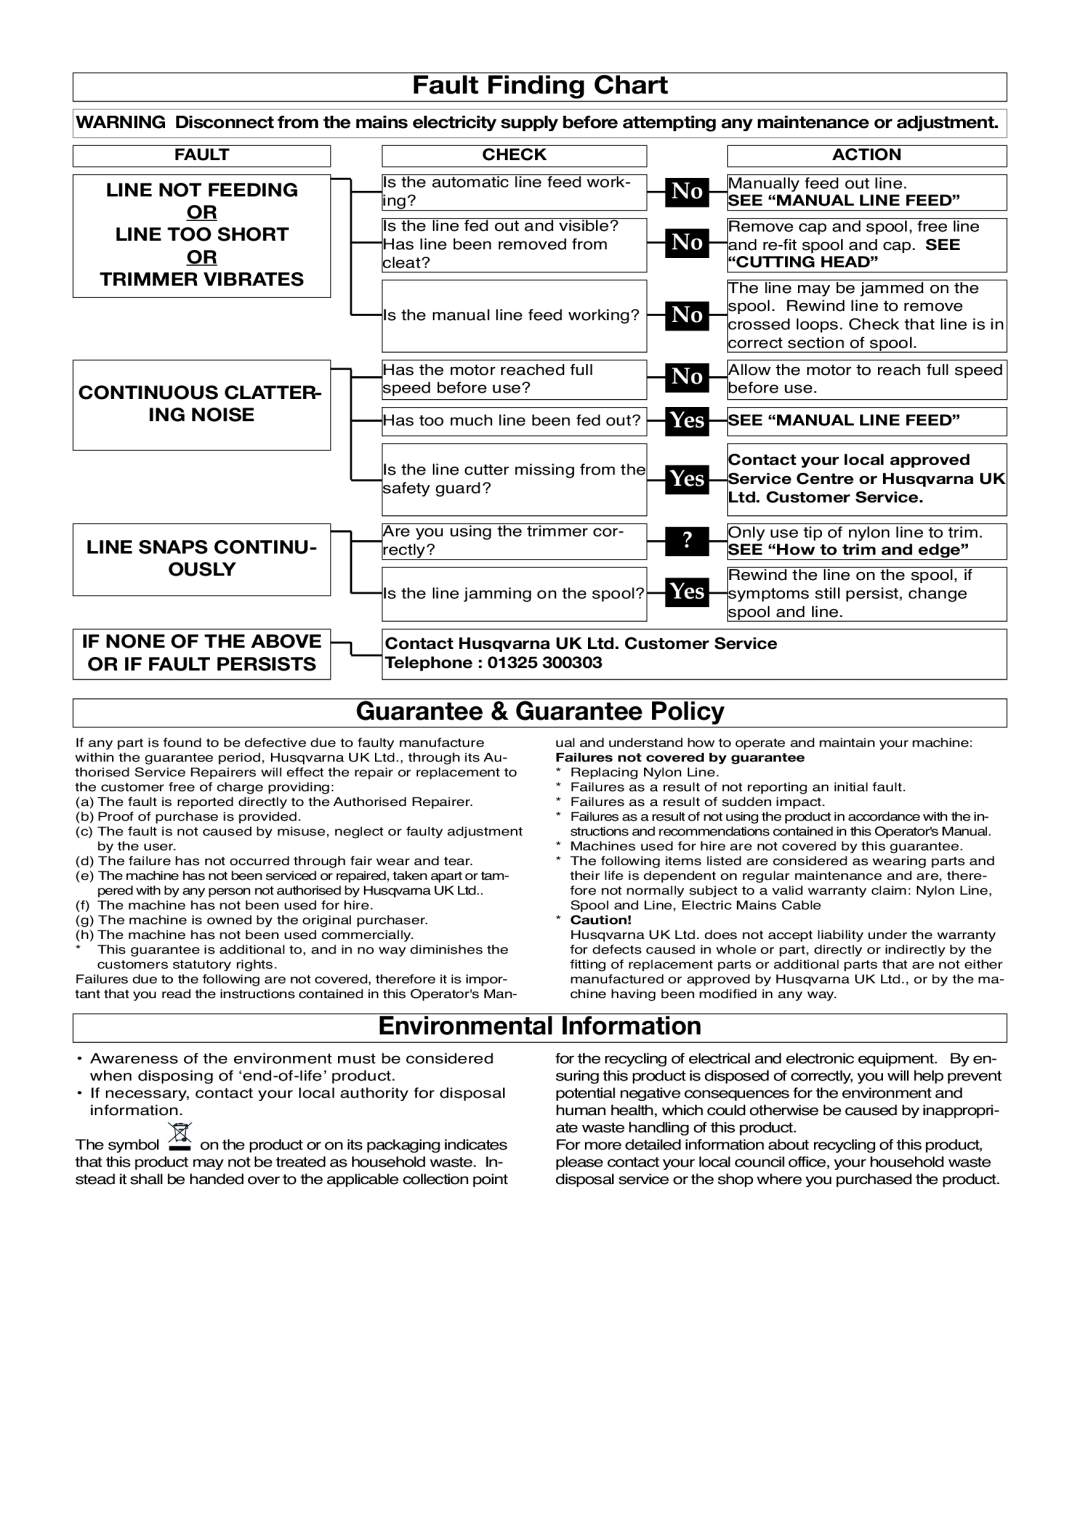 Flymo 500 XT manual Fault Finding Chart, Guarantee & Guarantee Policy, Environmental Information, Ously 